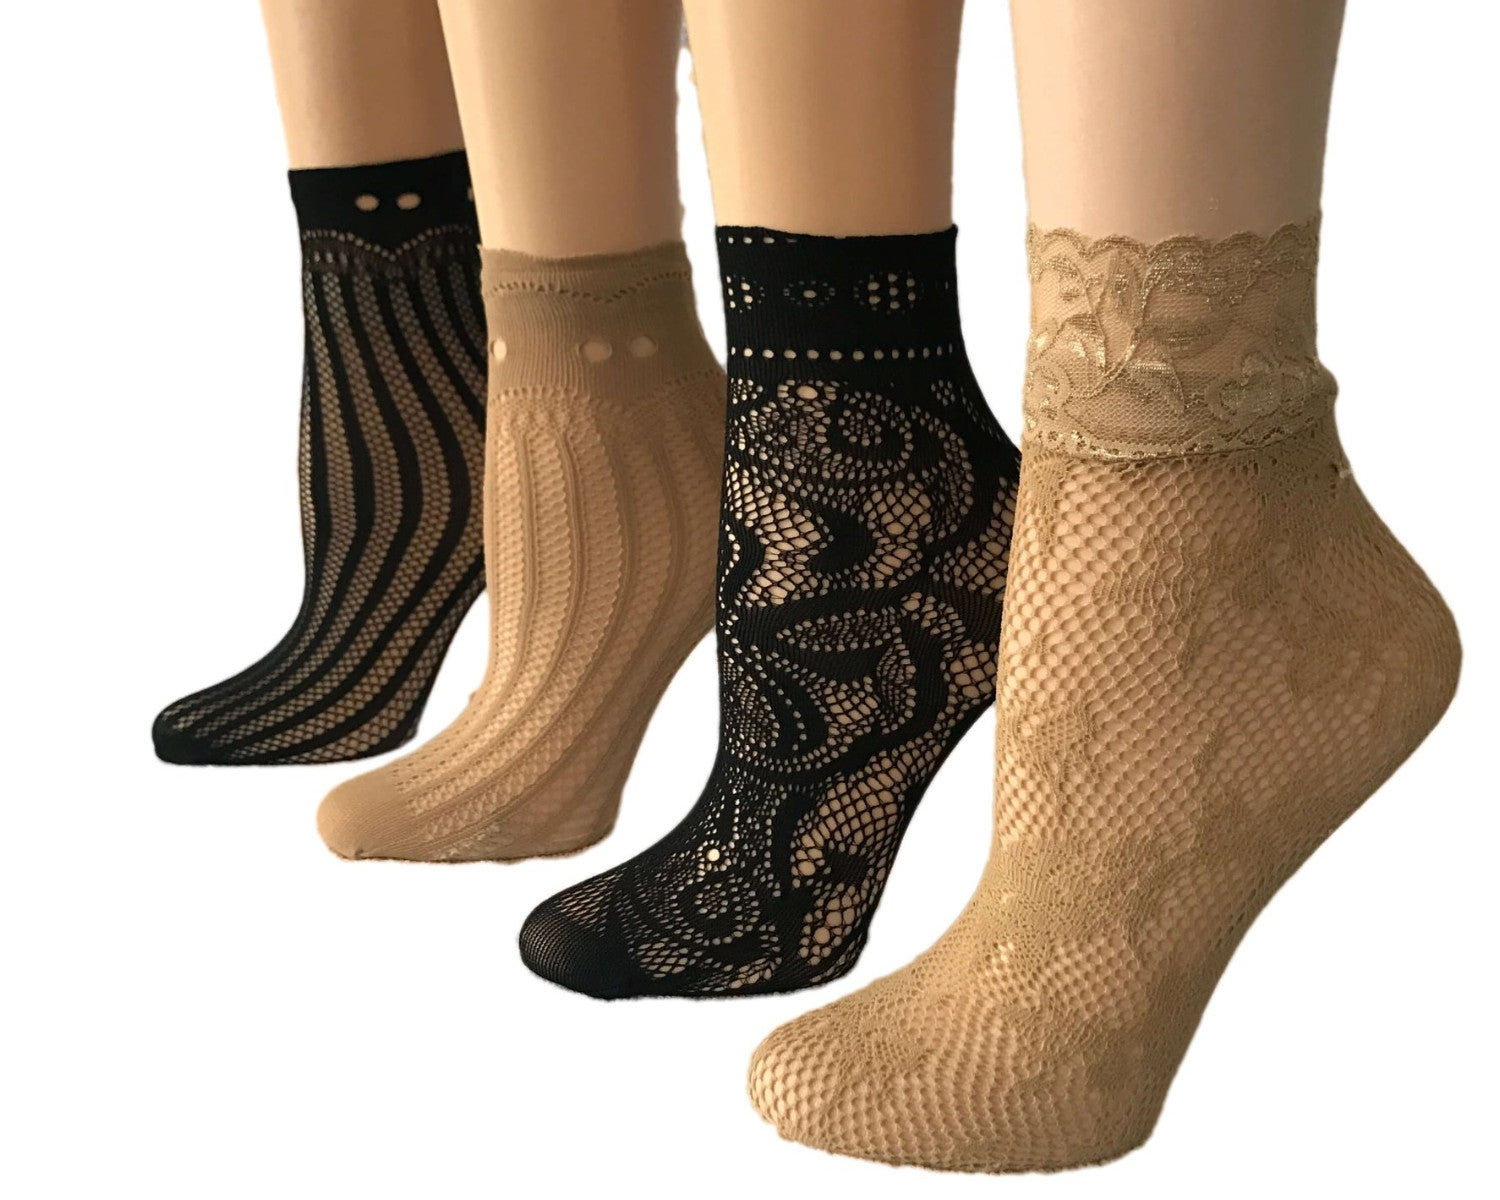 Cream Skin/Black Patterned Sheer Socks(Pack of 4 Pairs) - Global Trendz Fashion®